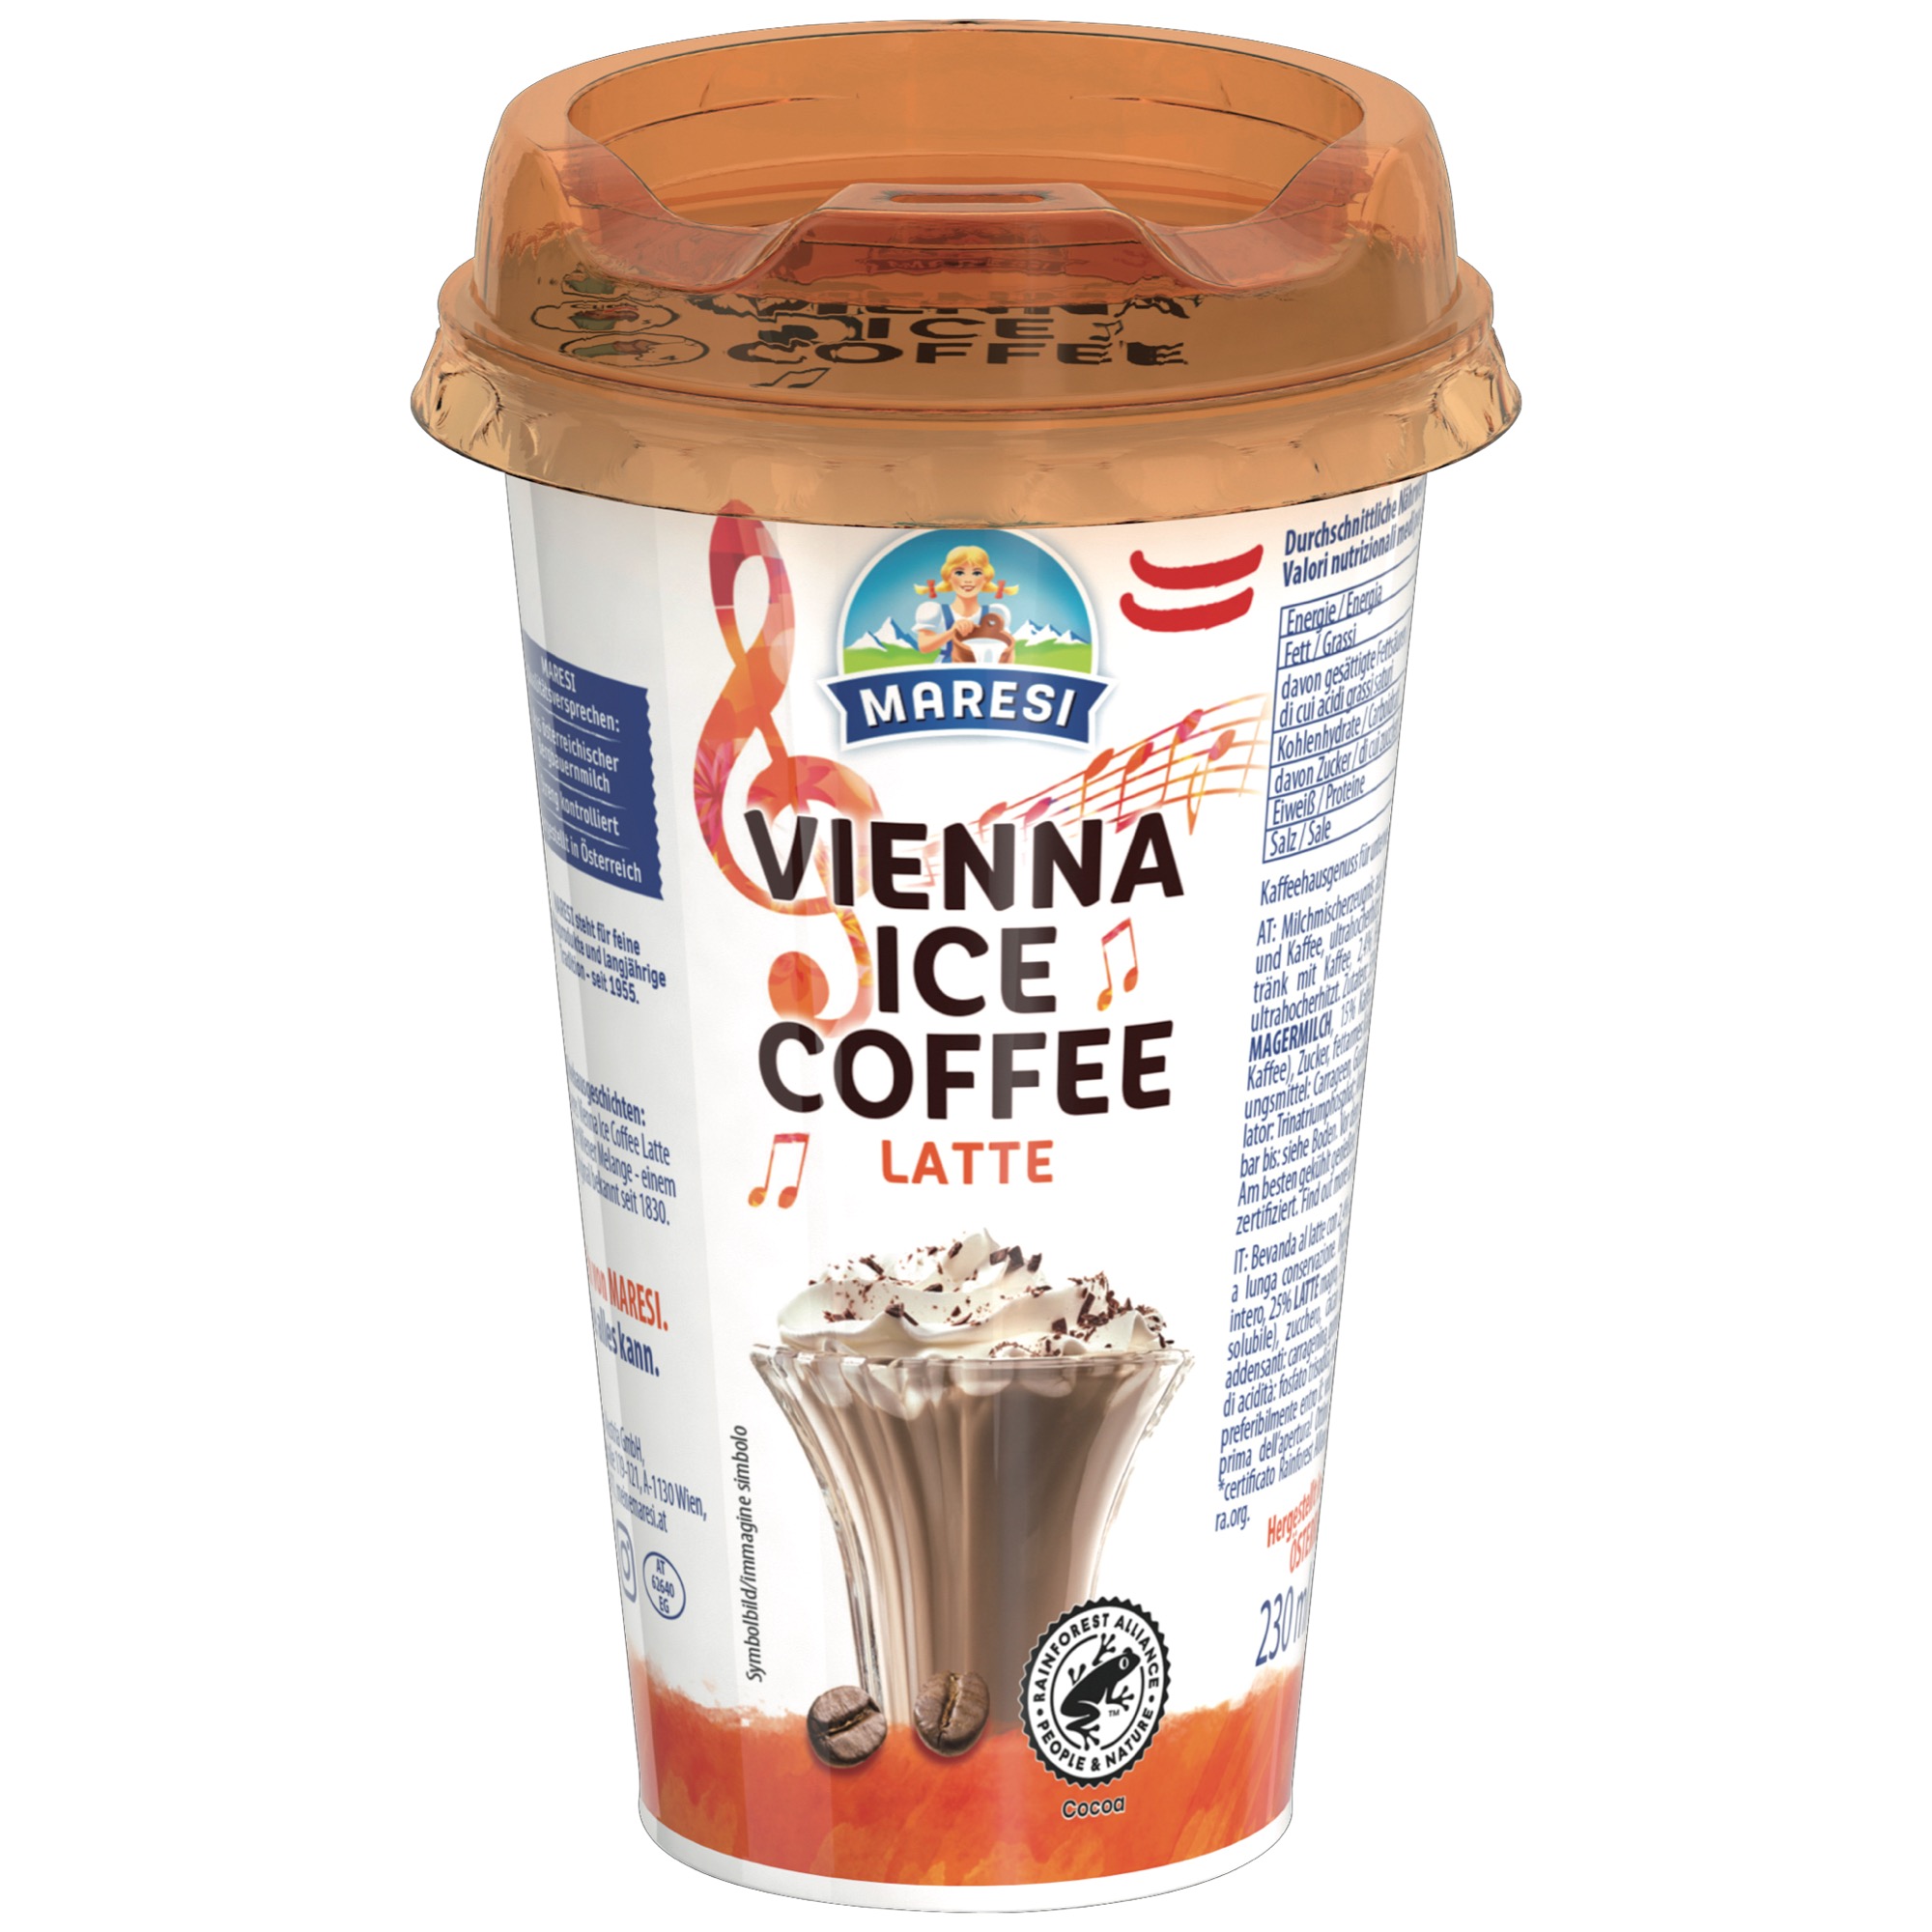 Maresi Vienna Ice Coffee 230ml Latte